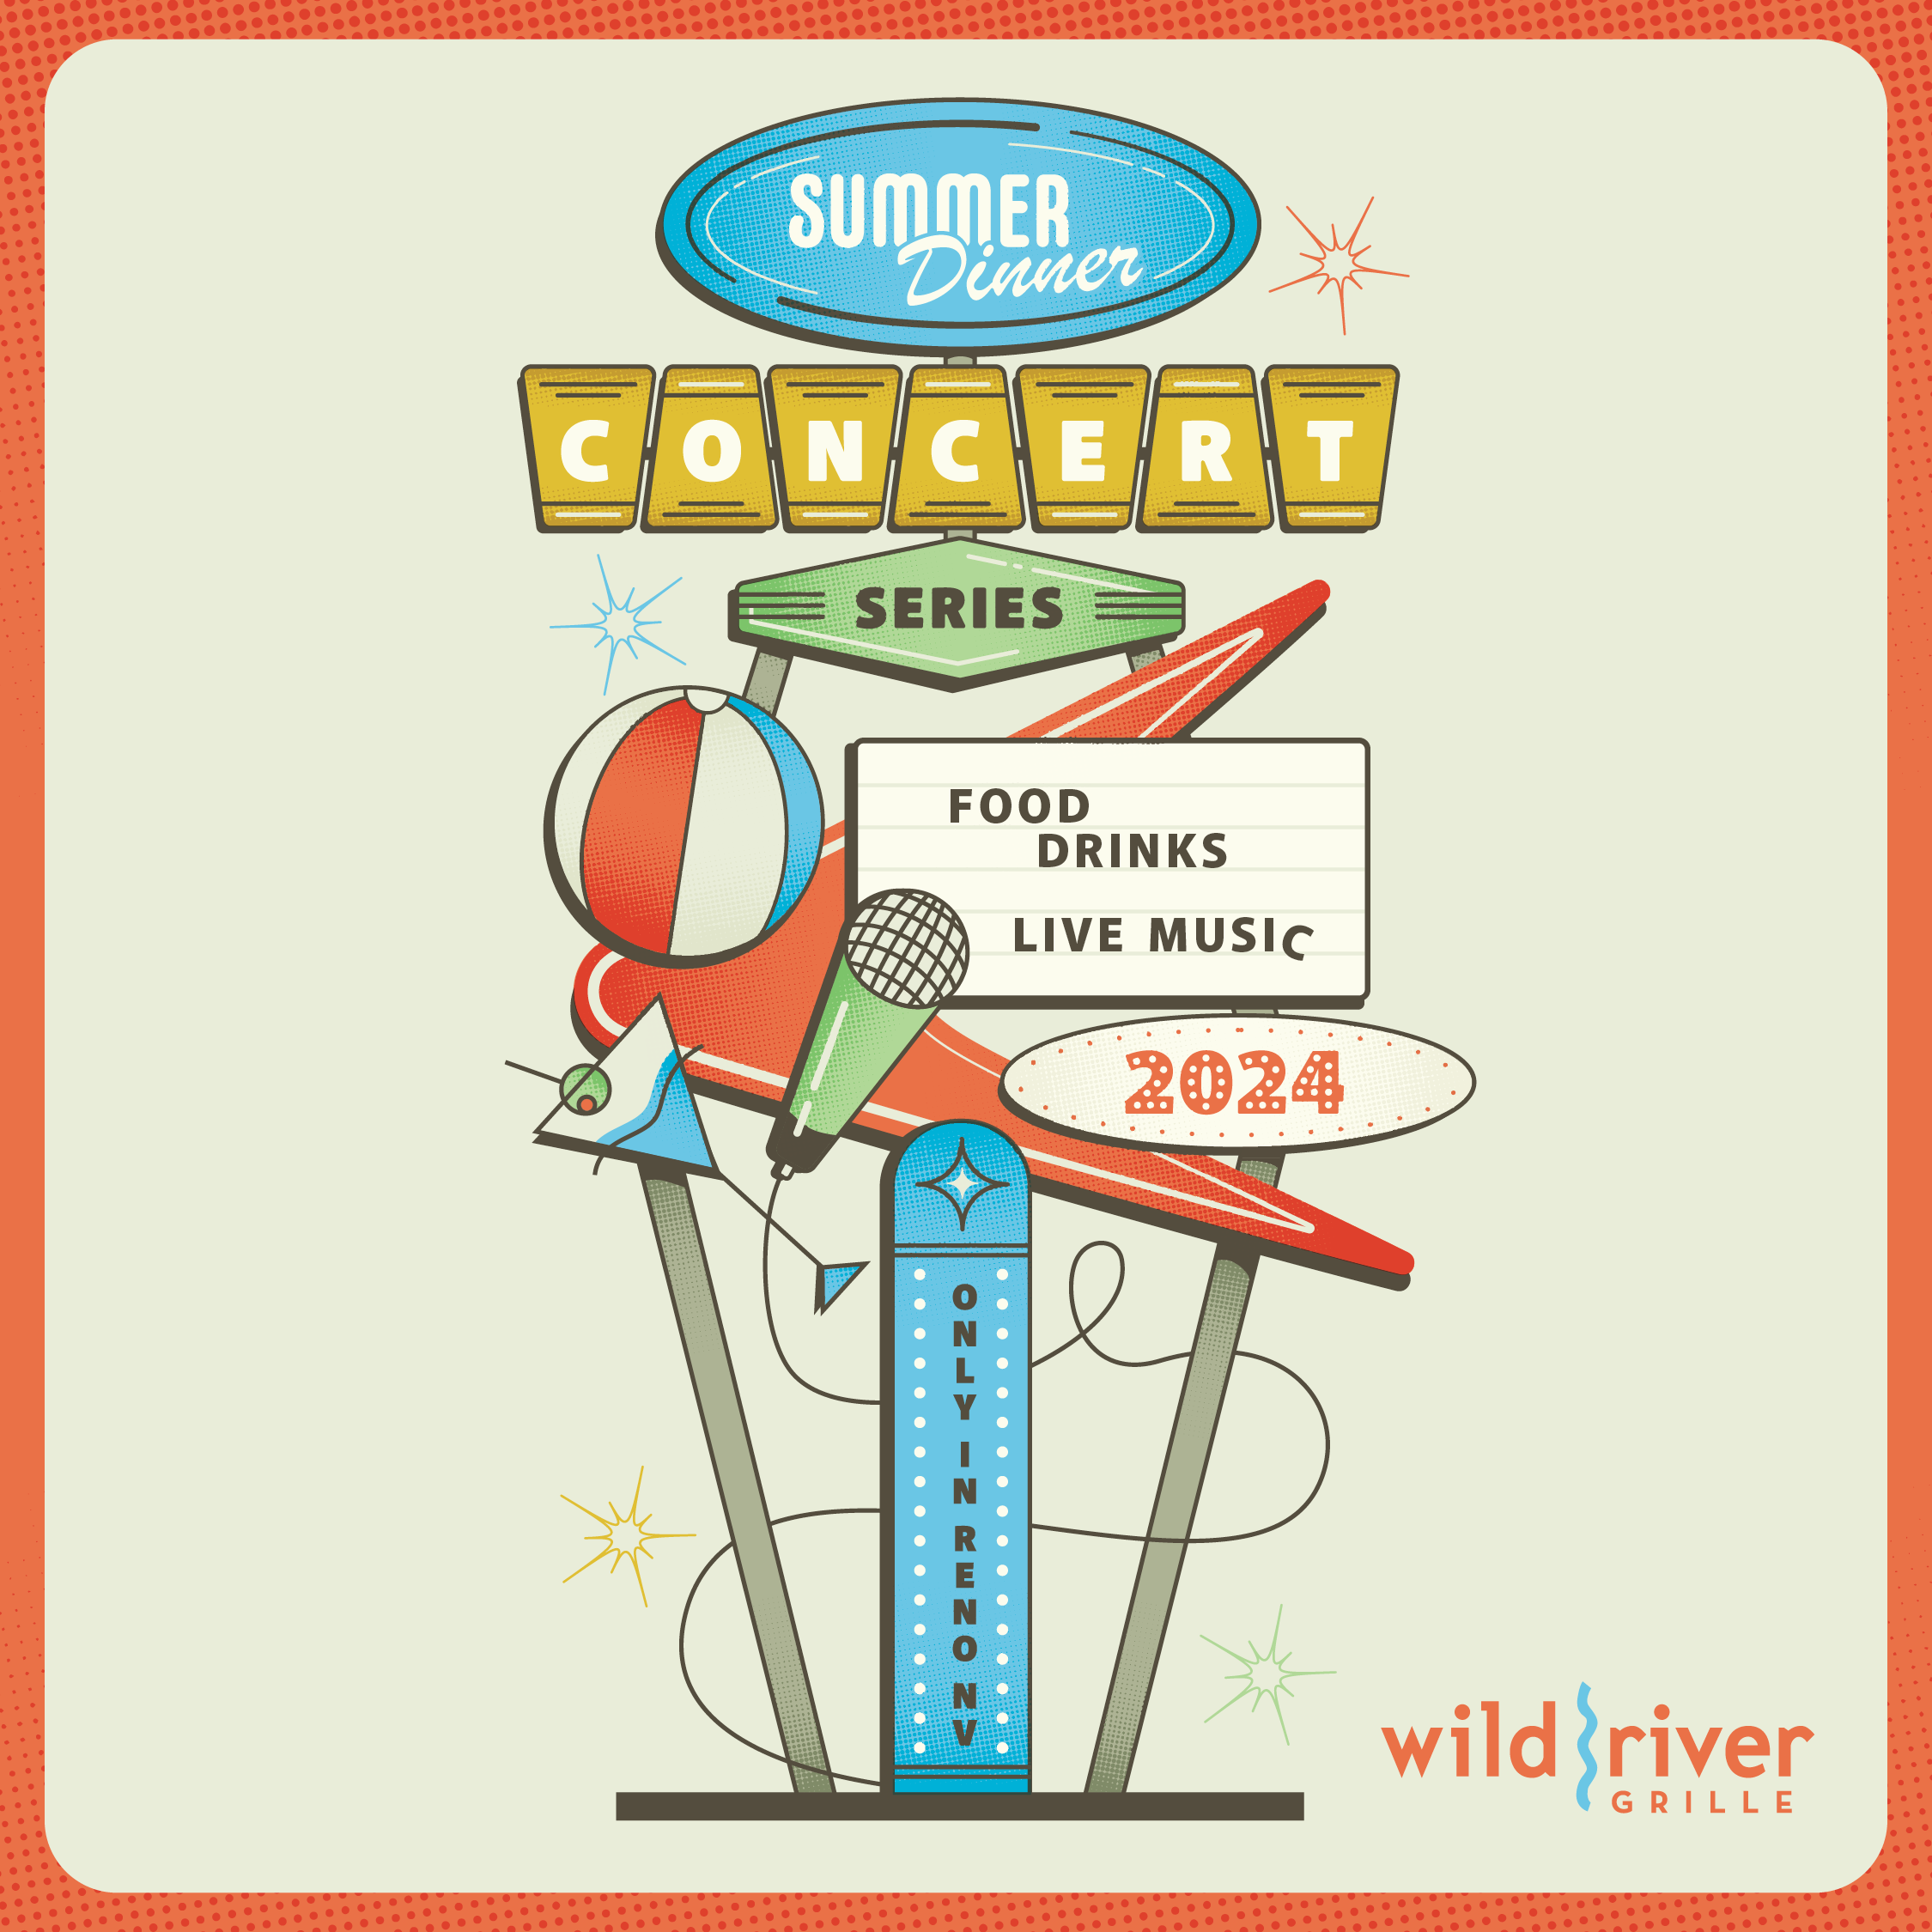 Wild River Grille Summer Concert Series